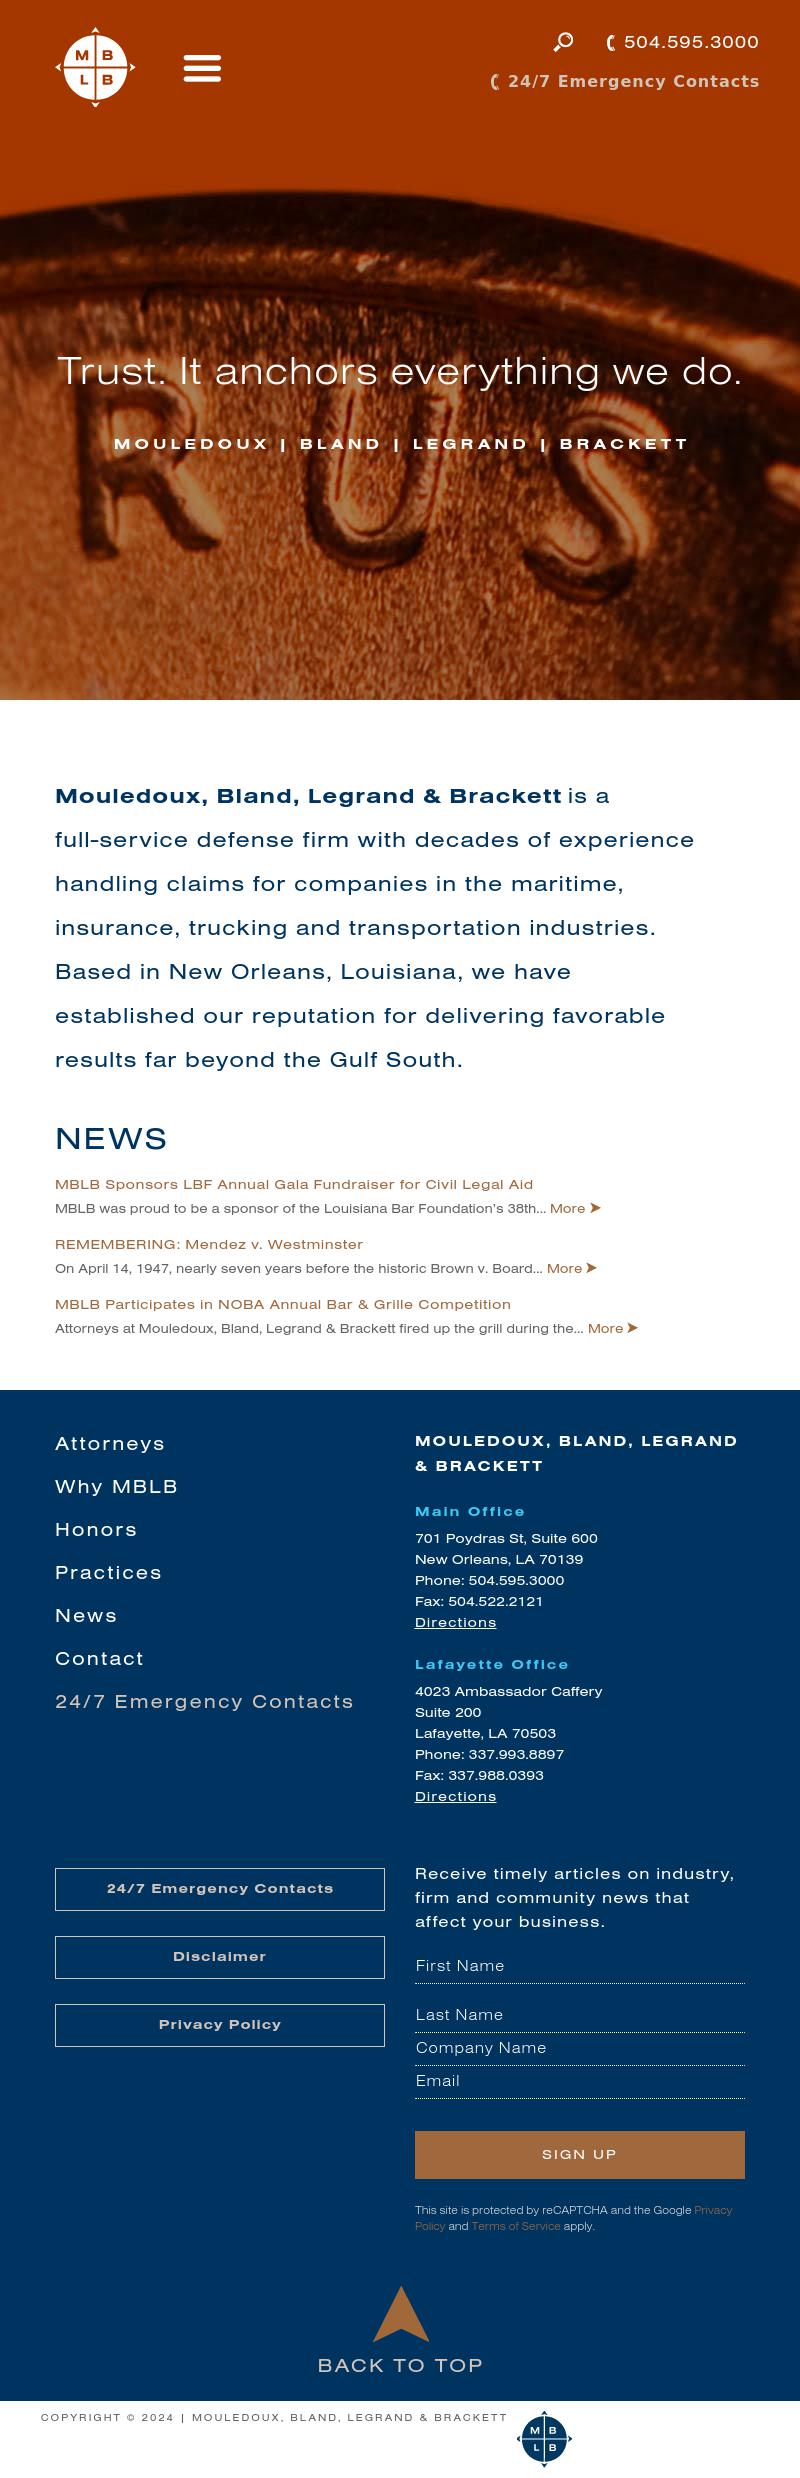 Mouledoux Bland Legrand & Brackett LLC - New Orleans LA Lawyers